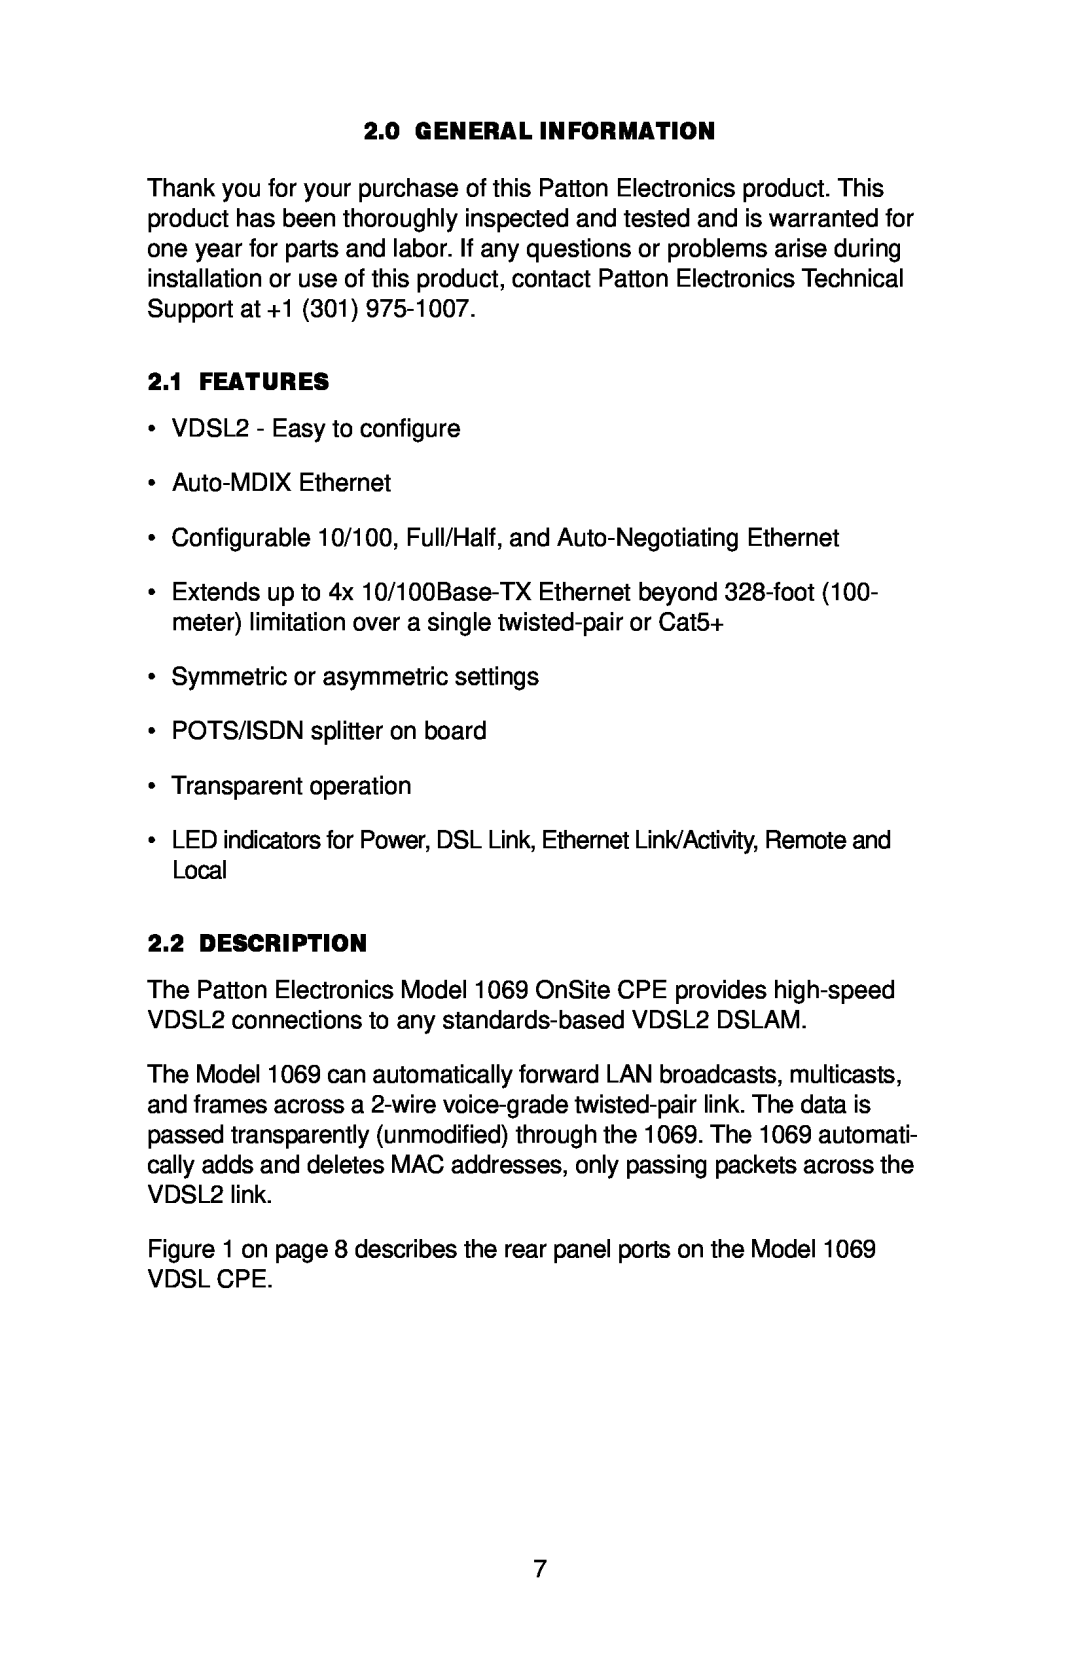 Patton electronic 1069 user manual General Information, Features, Description 